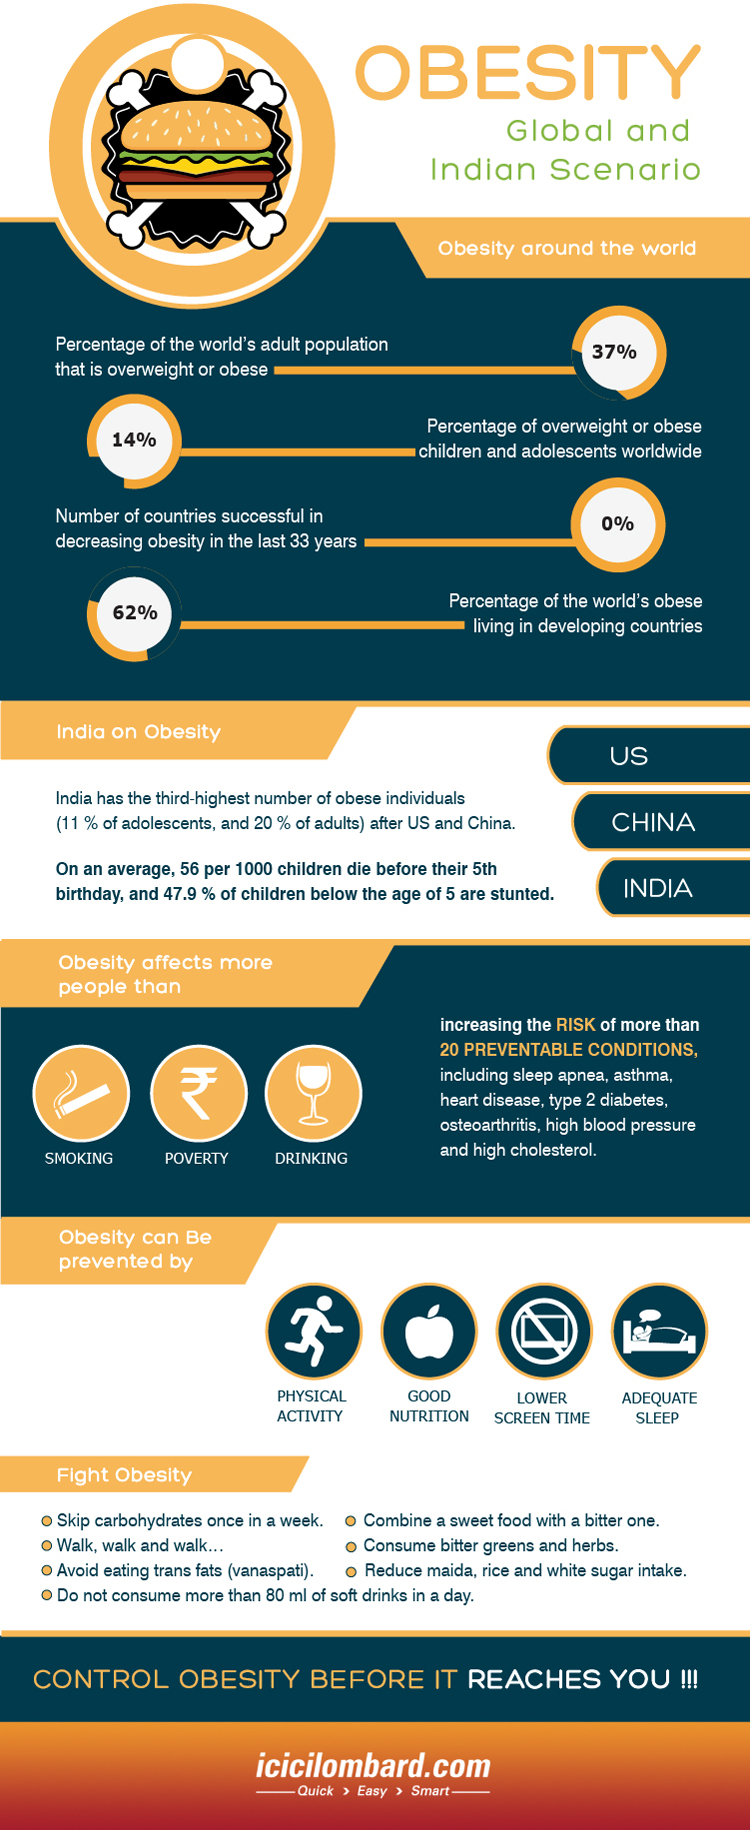 20151014-obesity-global-and-indian-scenario